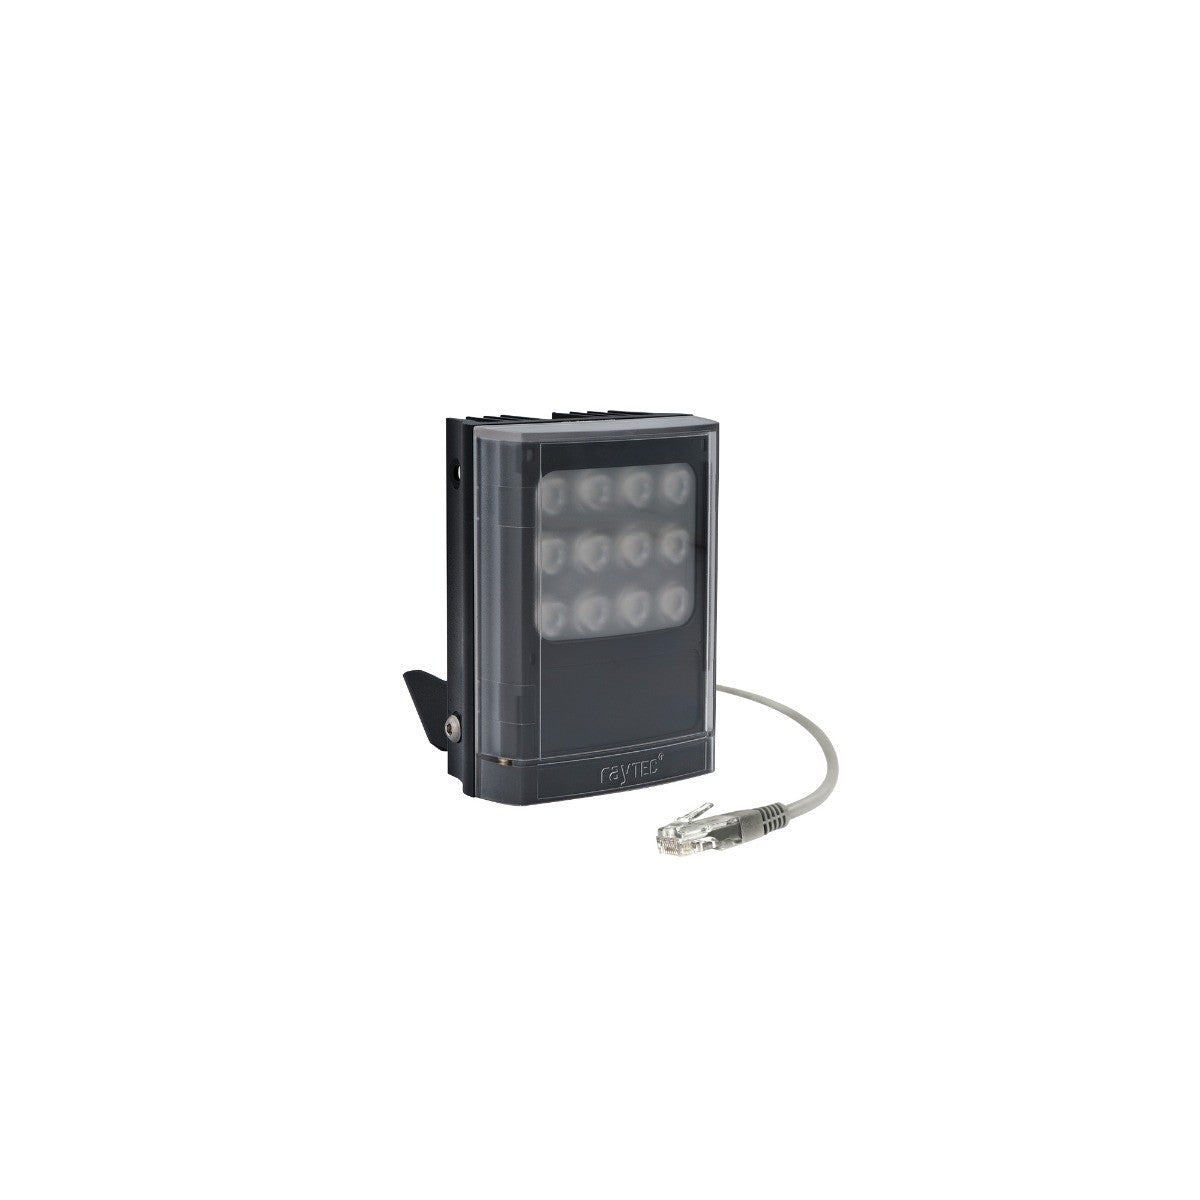 VARIO IP PoE Network Illuminator i6 850nm with 3 Angle Options Incl. 24V DC or PoE+ Power Input